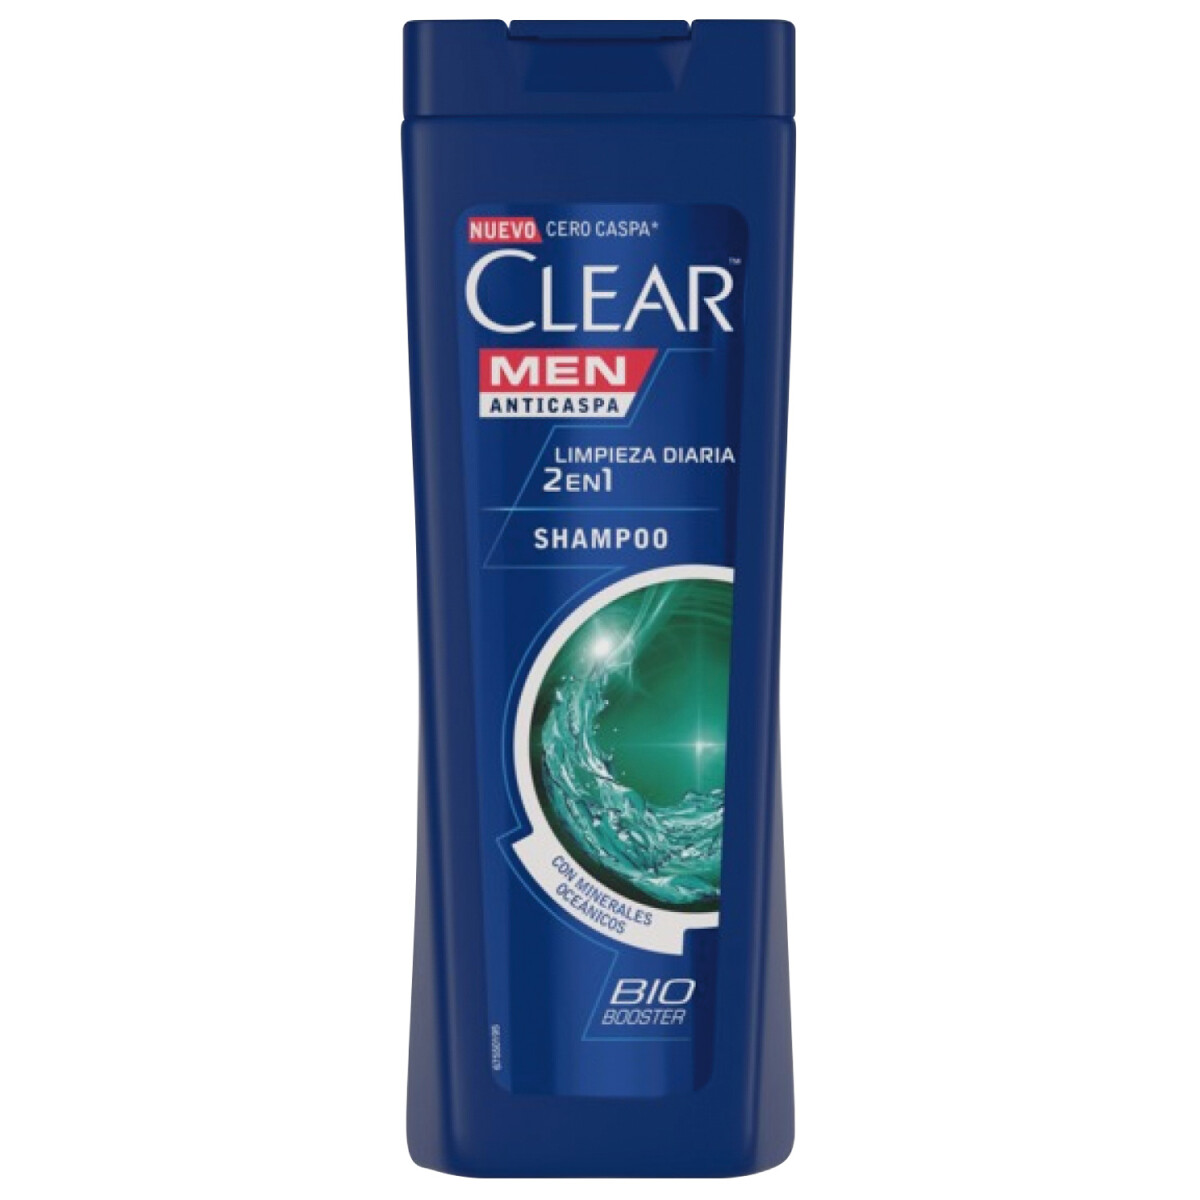 Shampoo Clear Anticaspa Men 2EN1 - 200 ML 